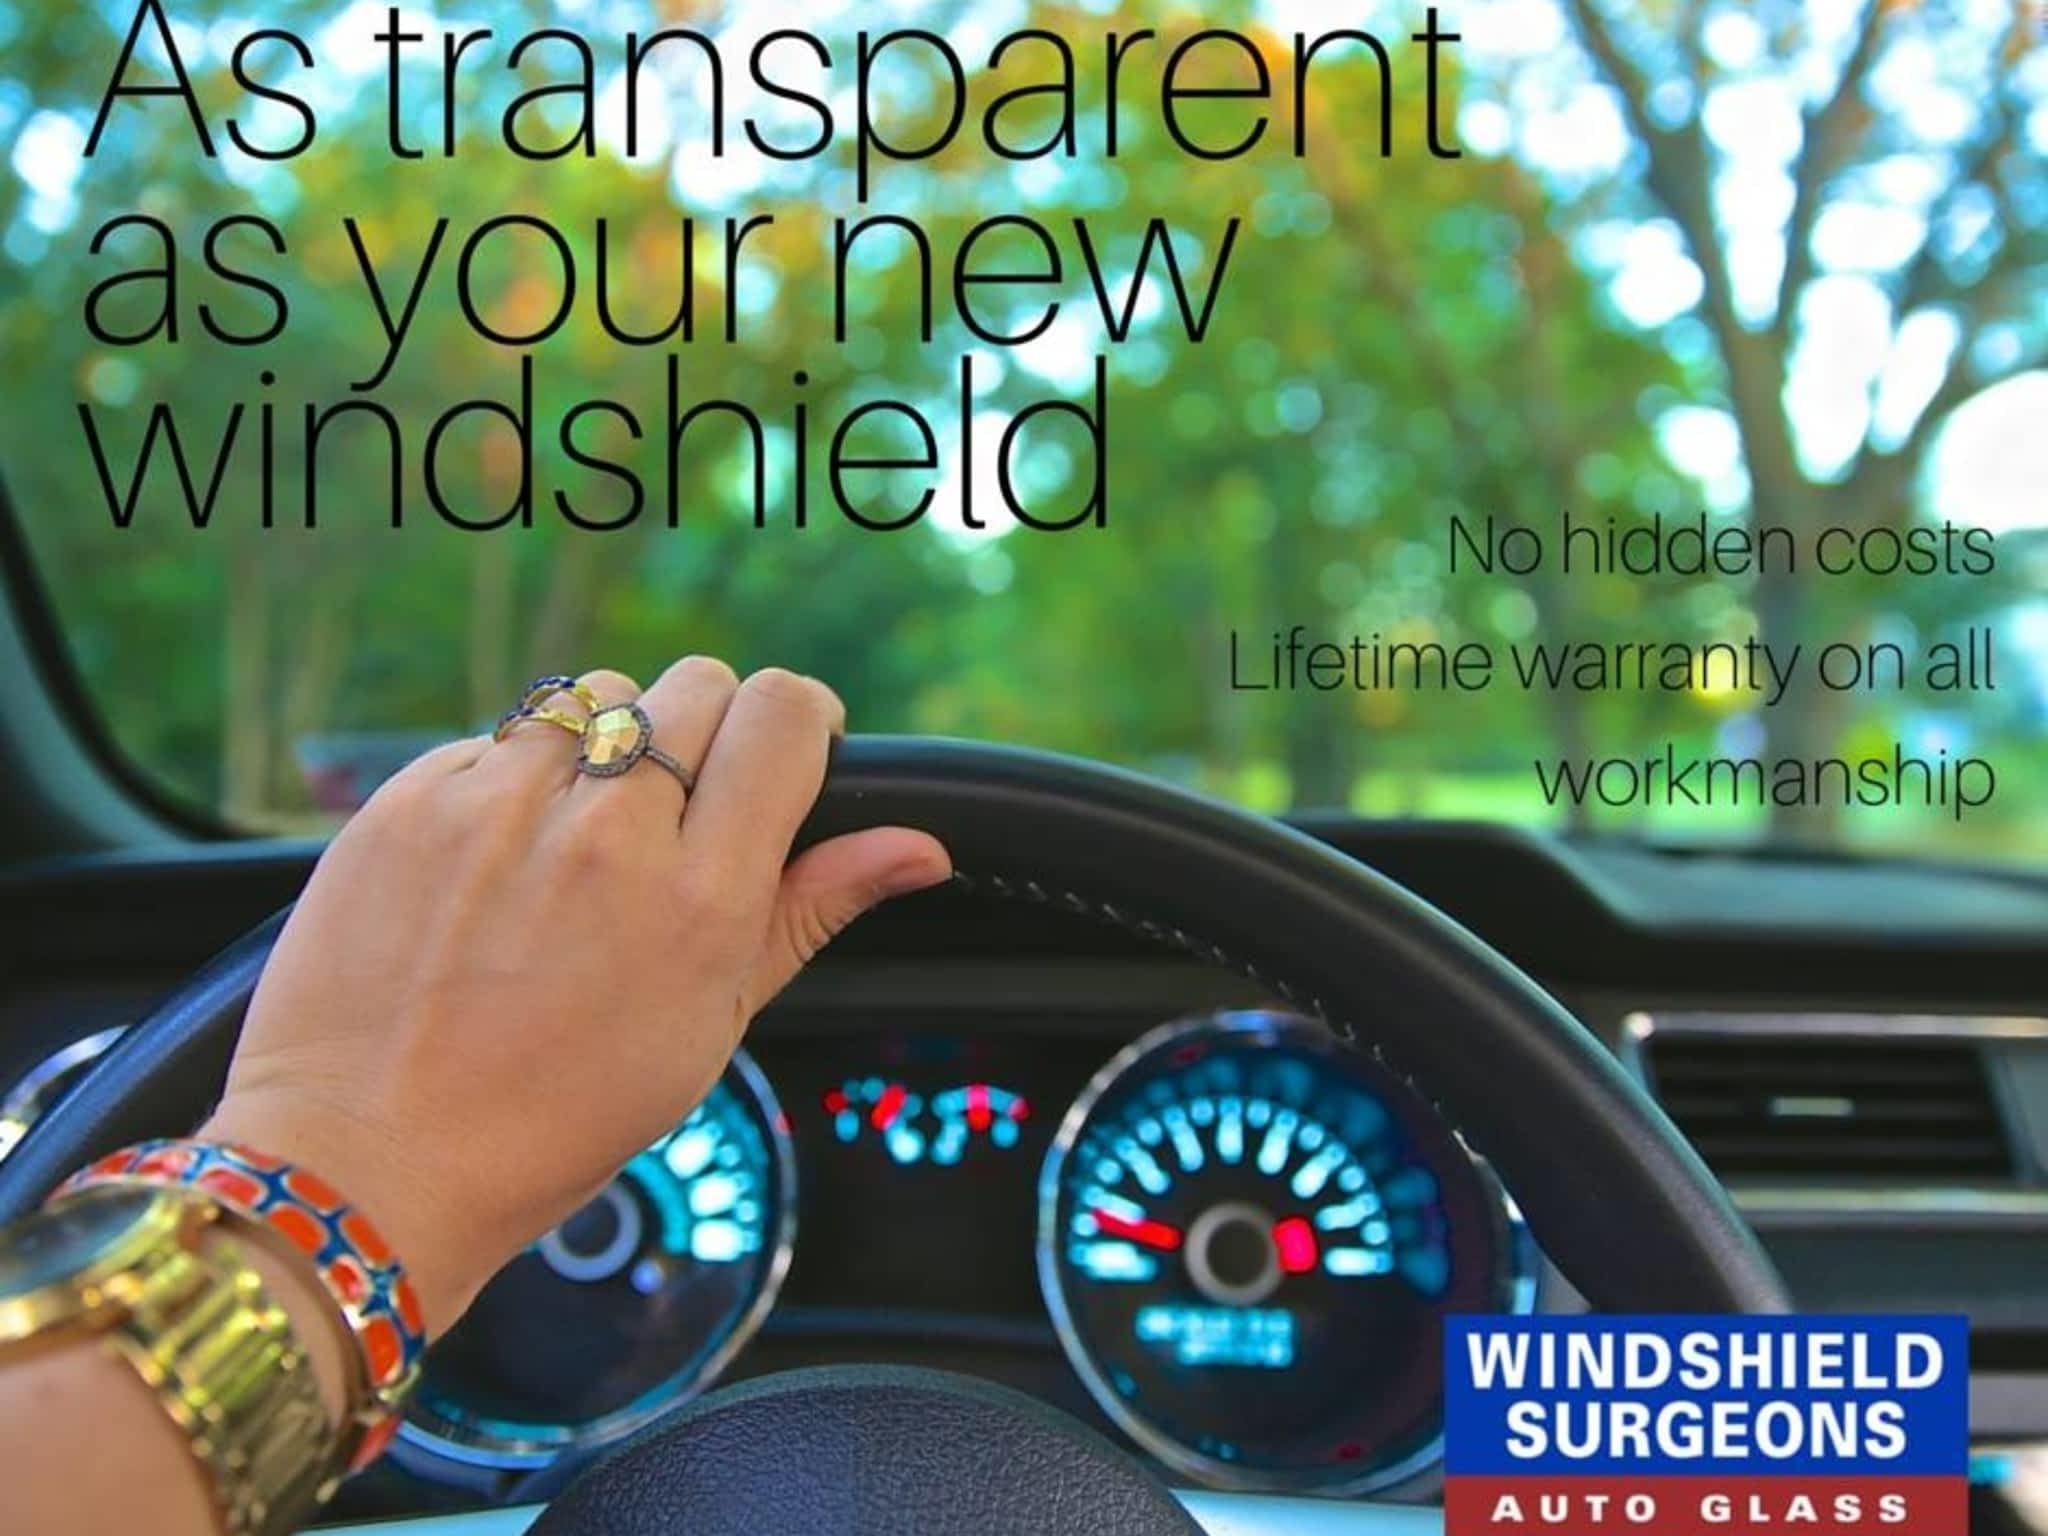 photo Windshield Surgeons Auto Glass